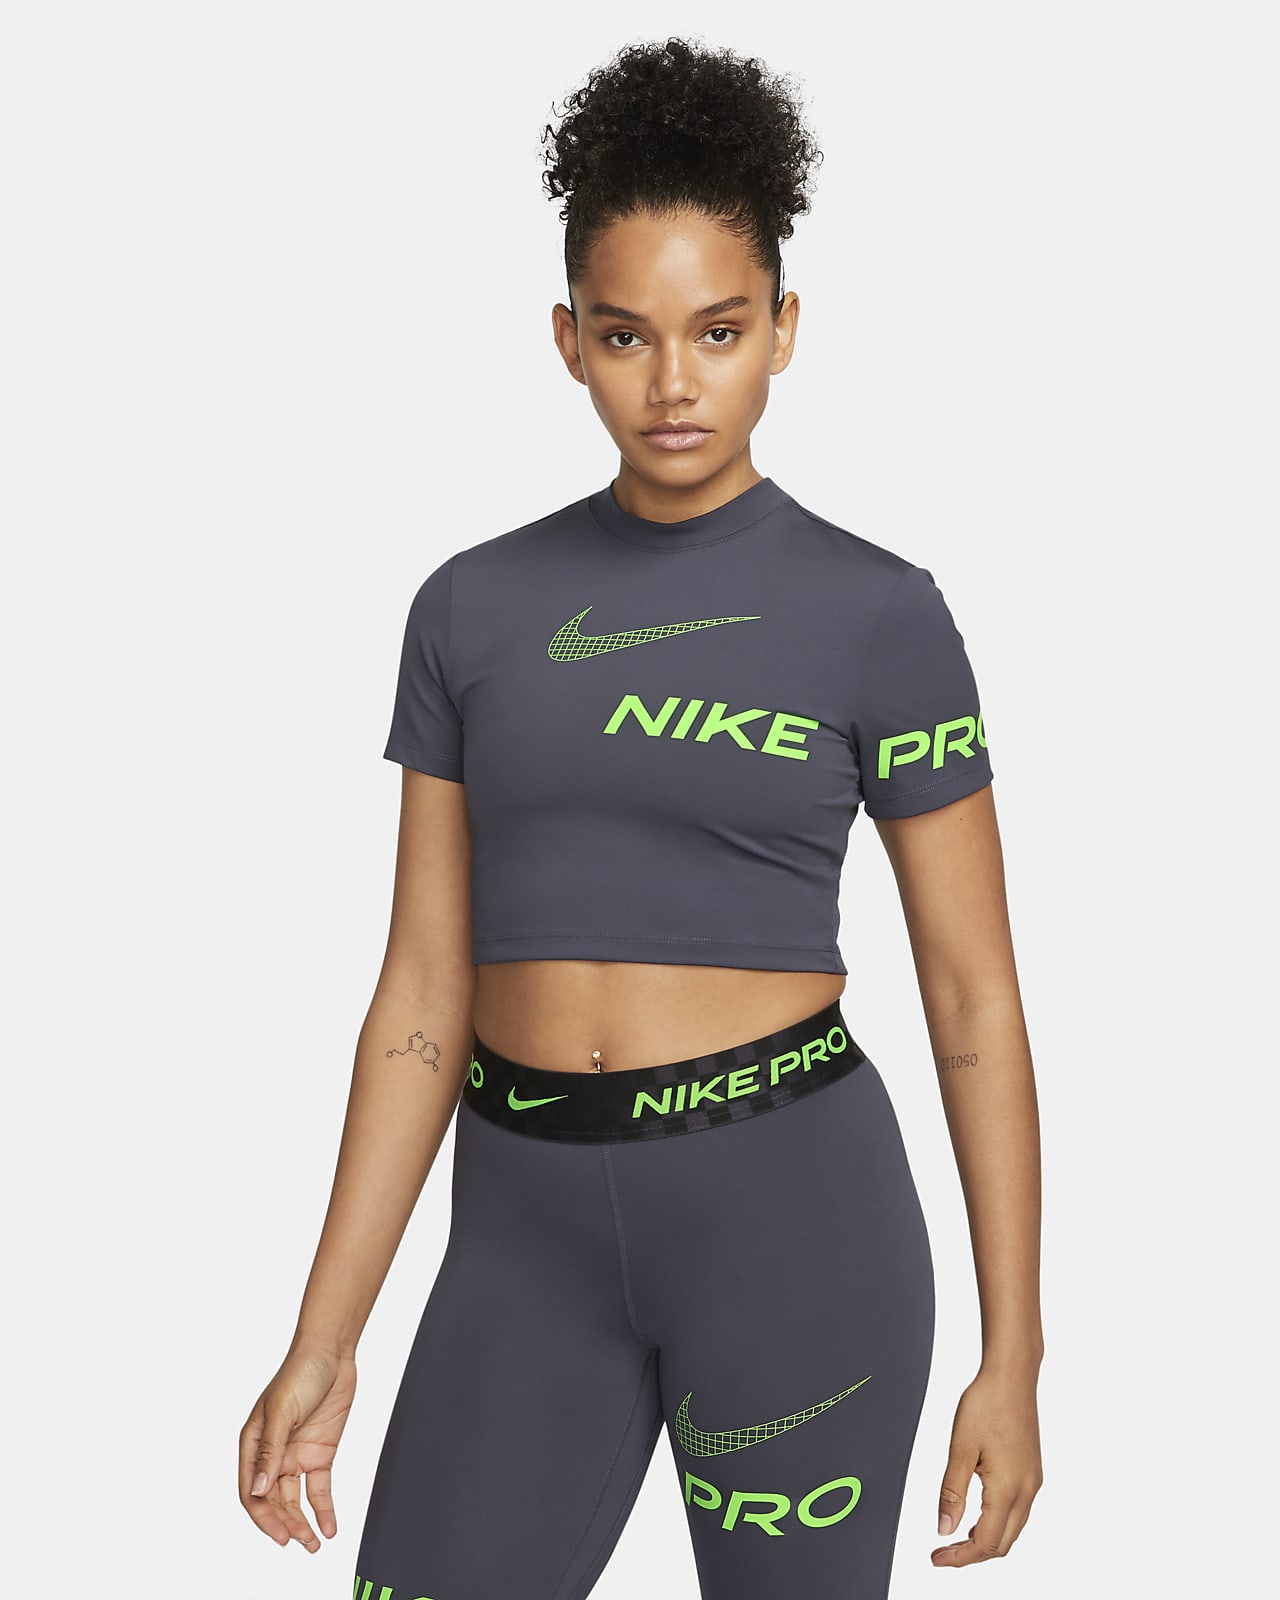 Pro Women's Short-Sleeve Cropped Graphic Training Top. Nike LU